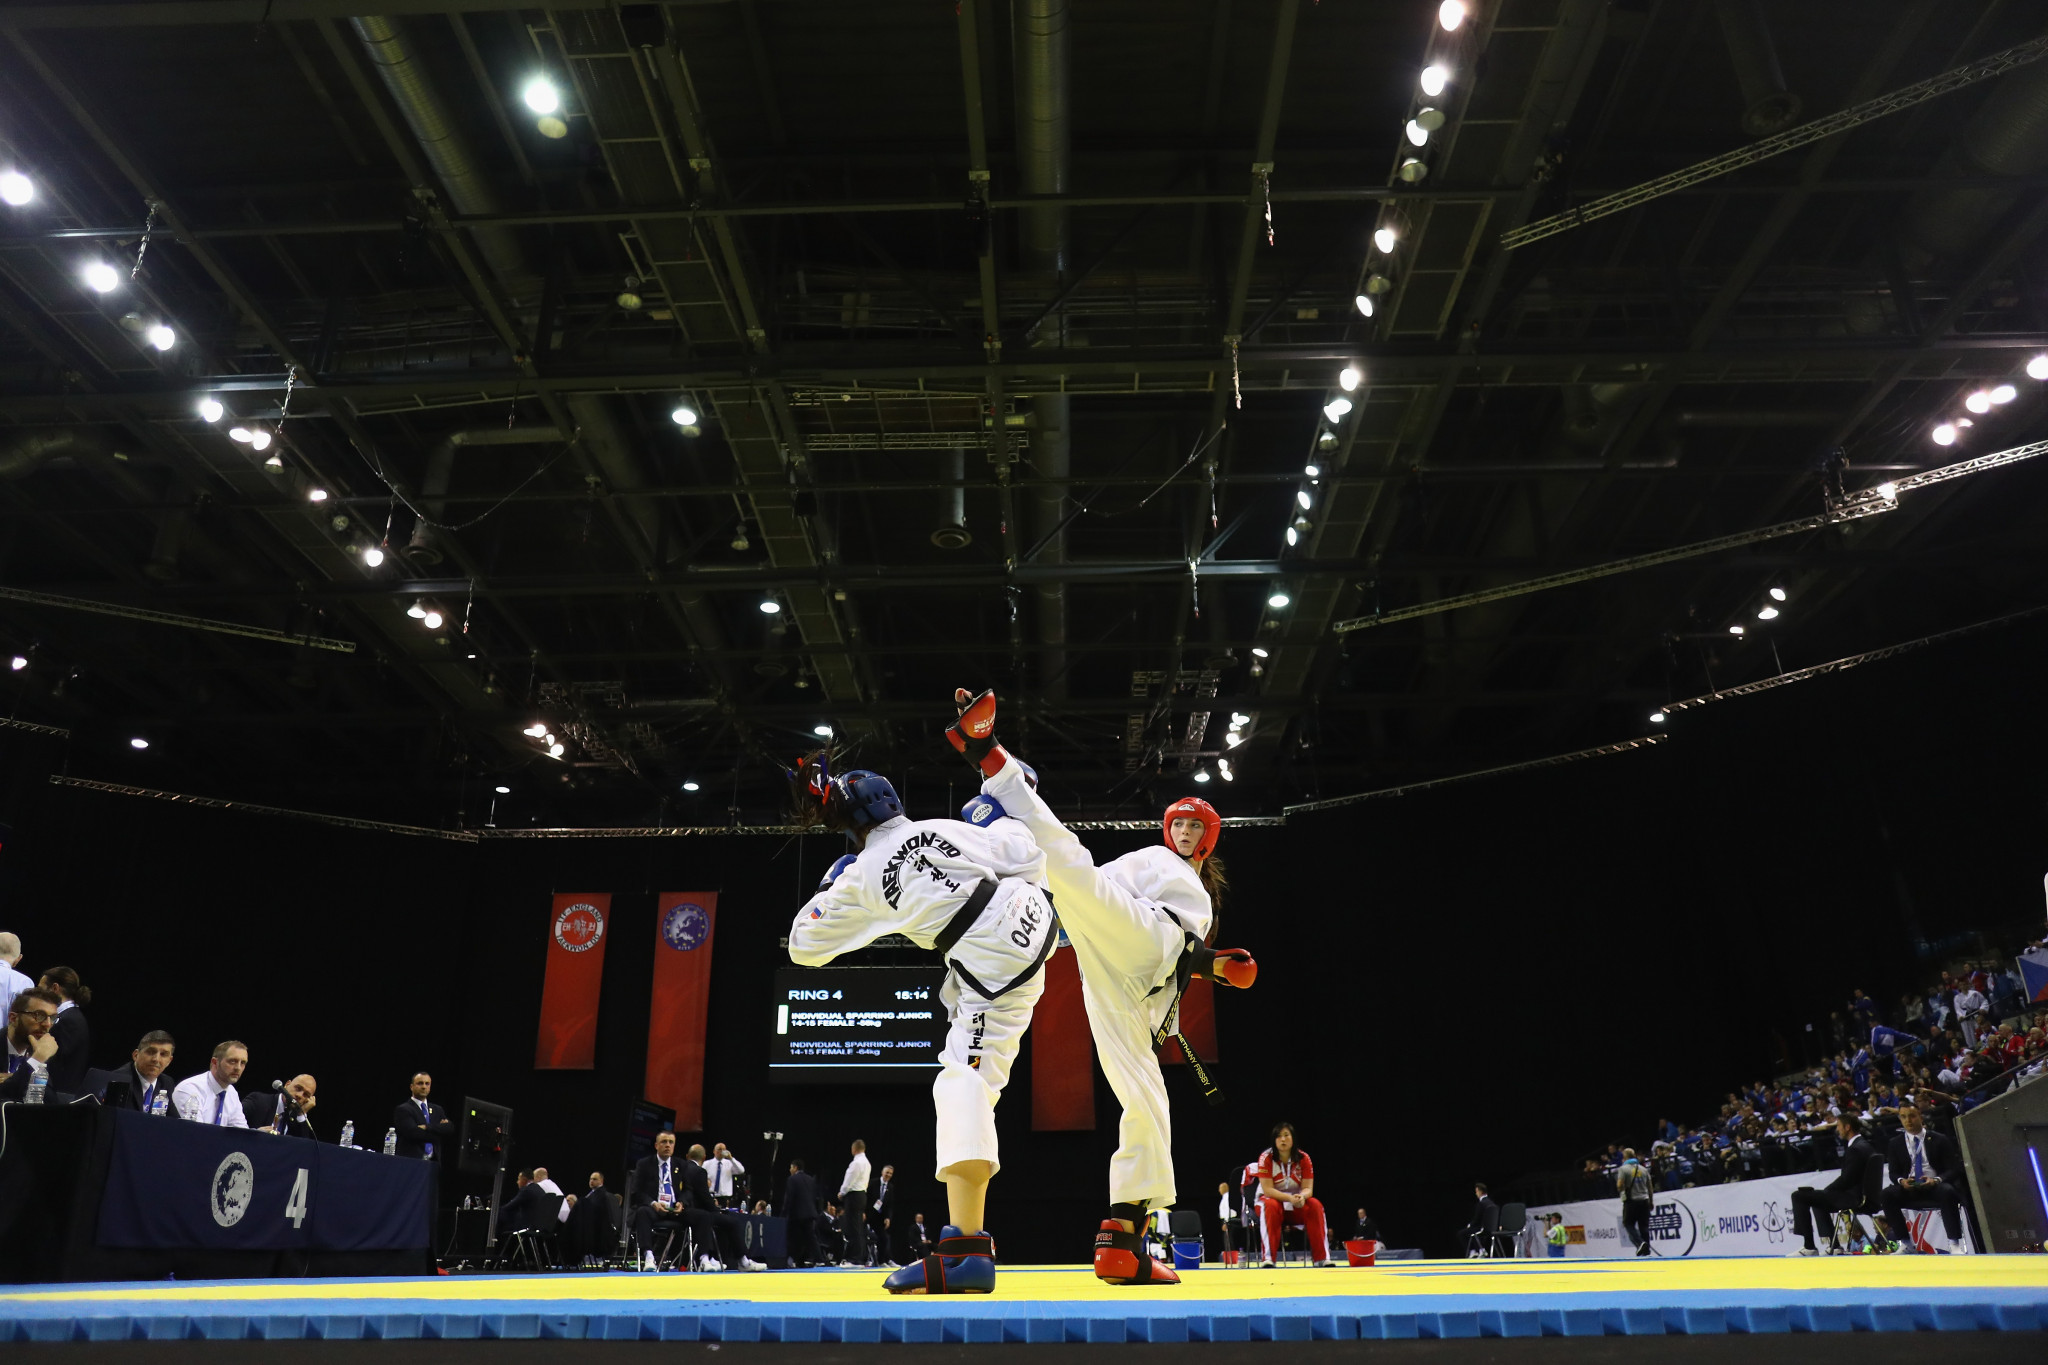 World Taekwondo celebrate after study shows positive impact of events